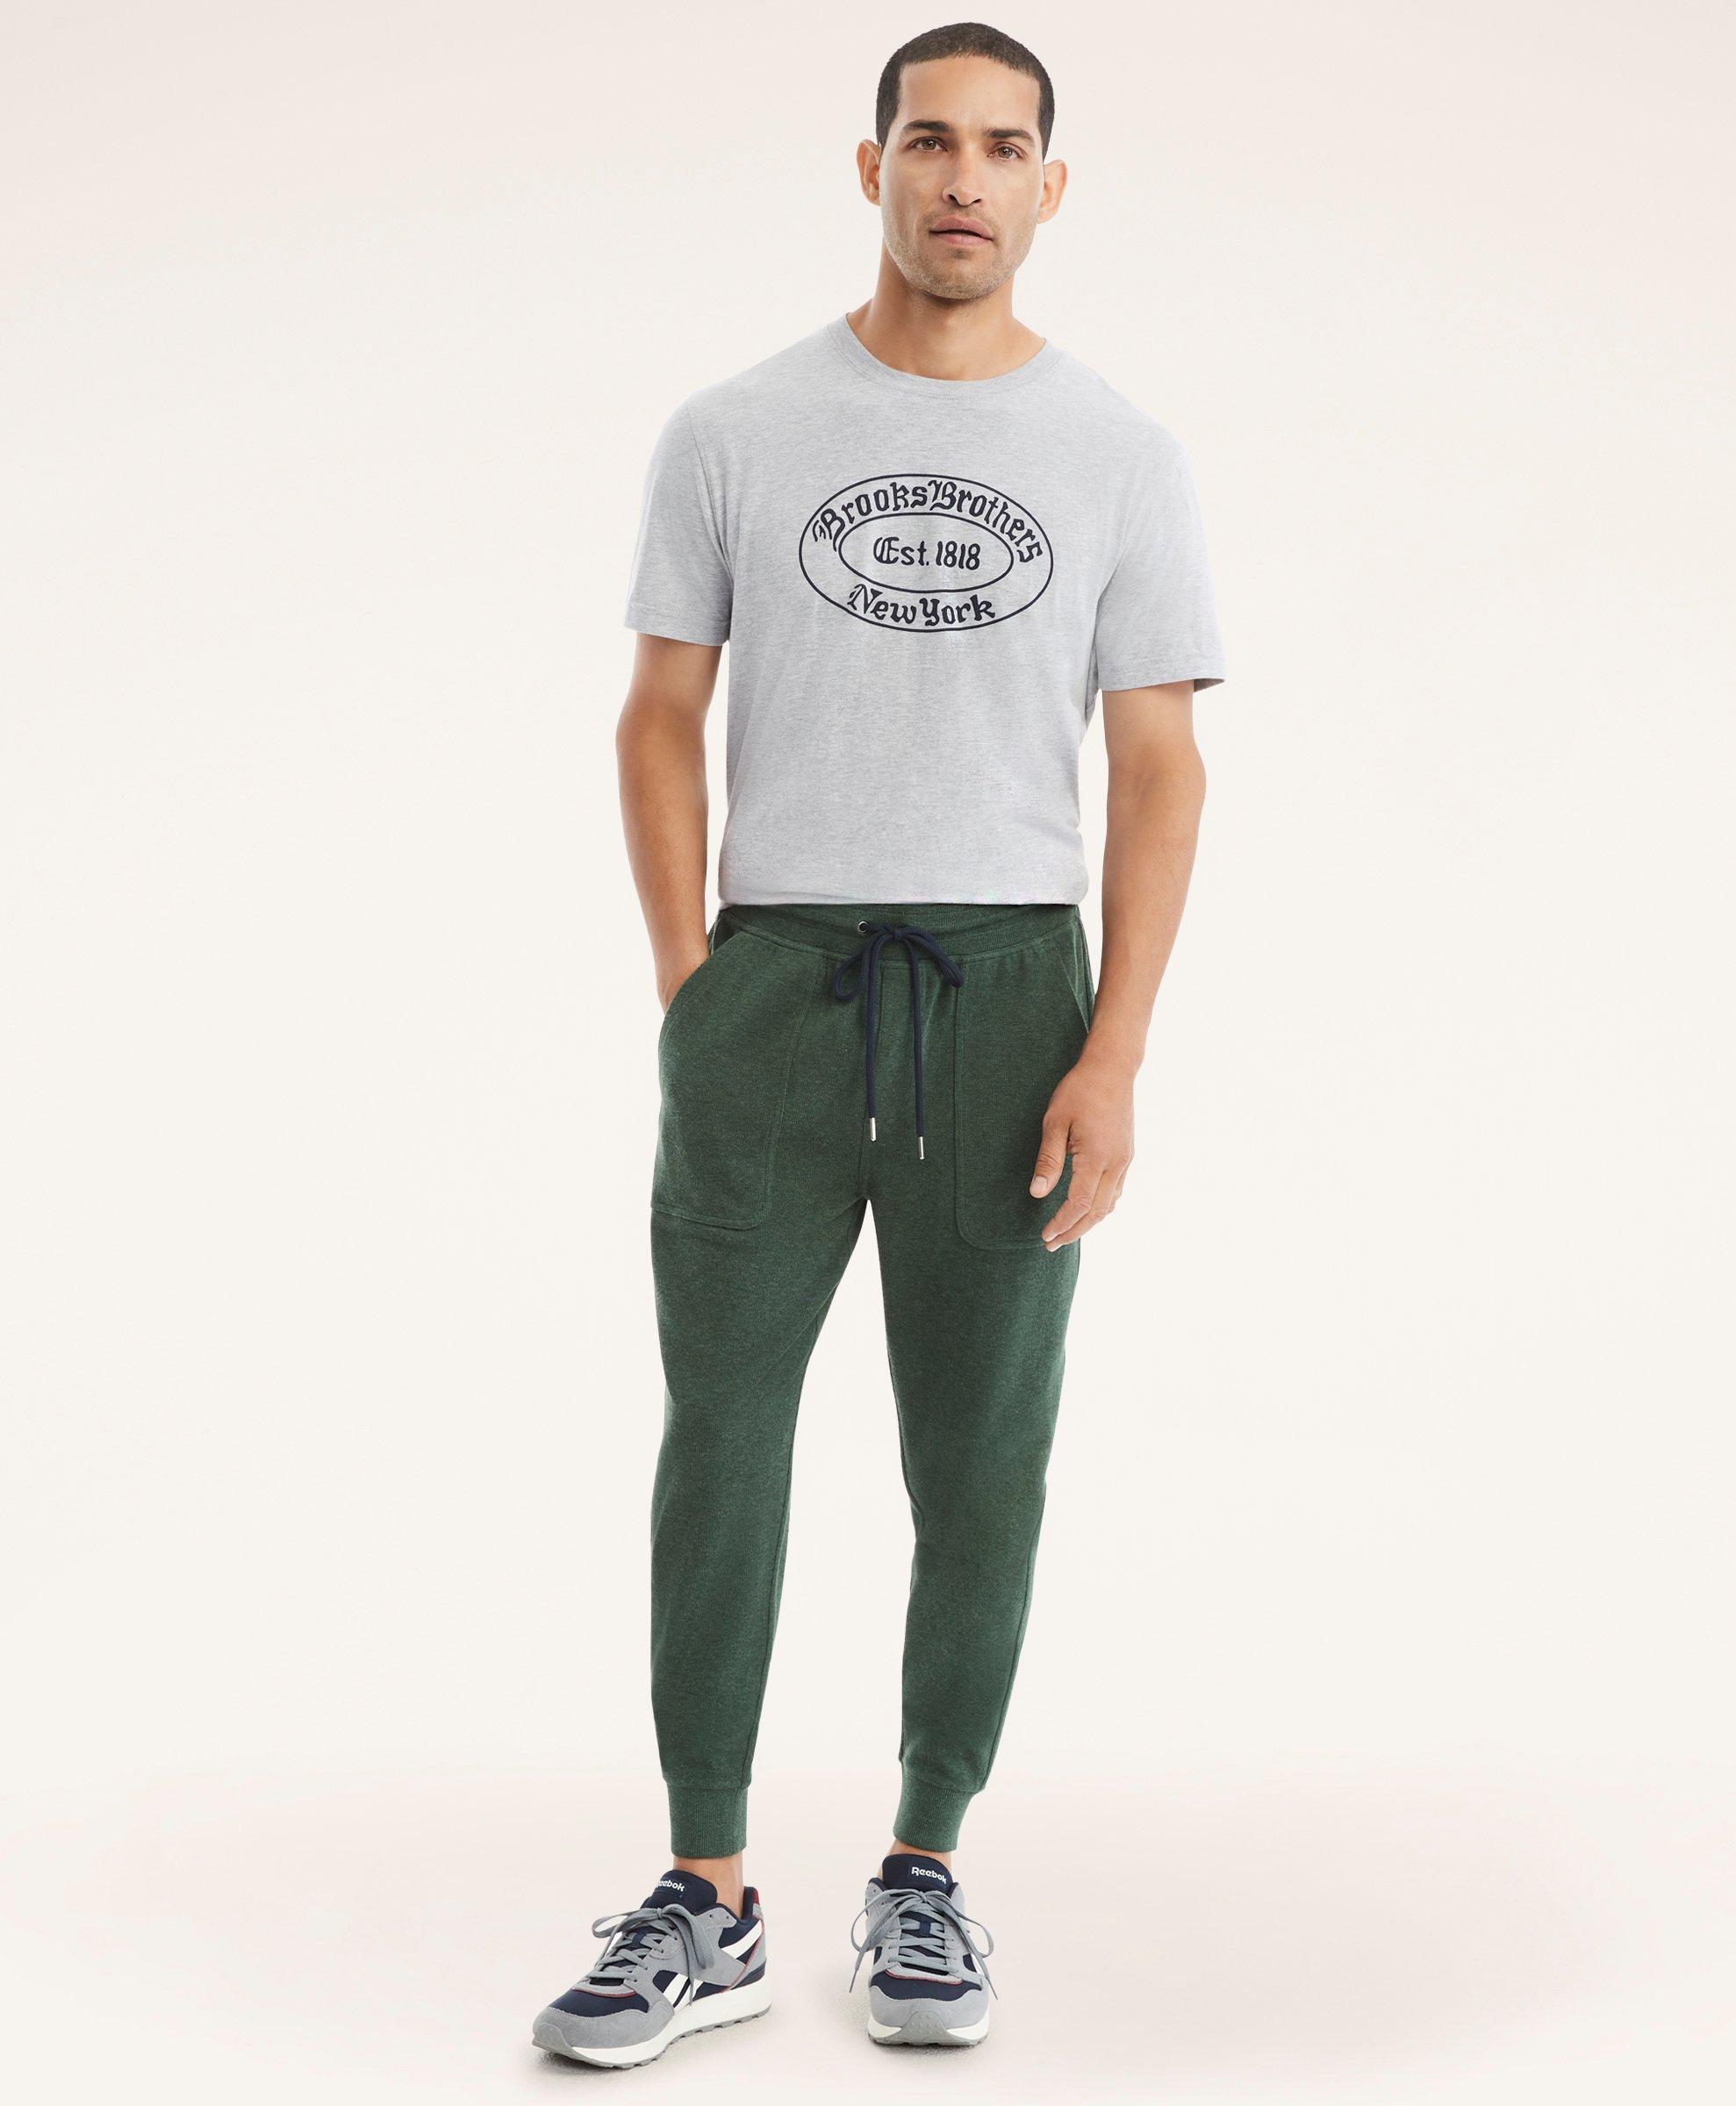 Grey Ribbed Joggers Men - Trendy Grey Jogger Pants